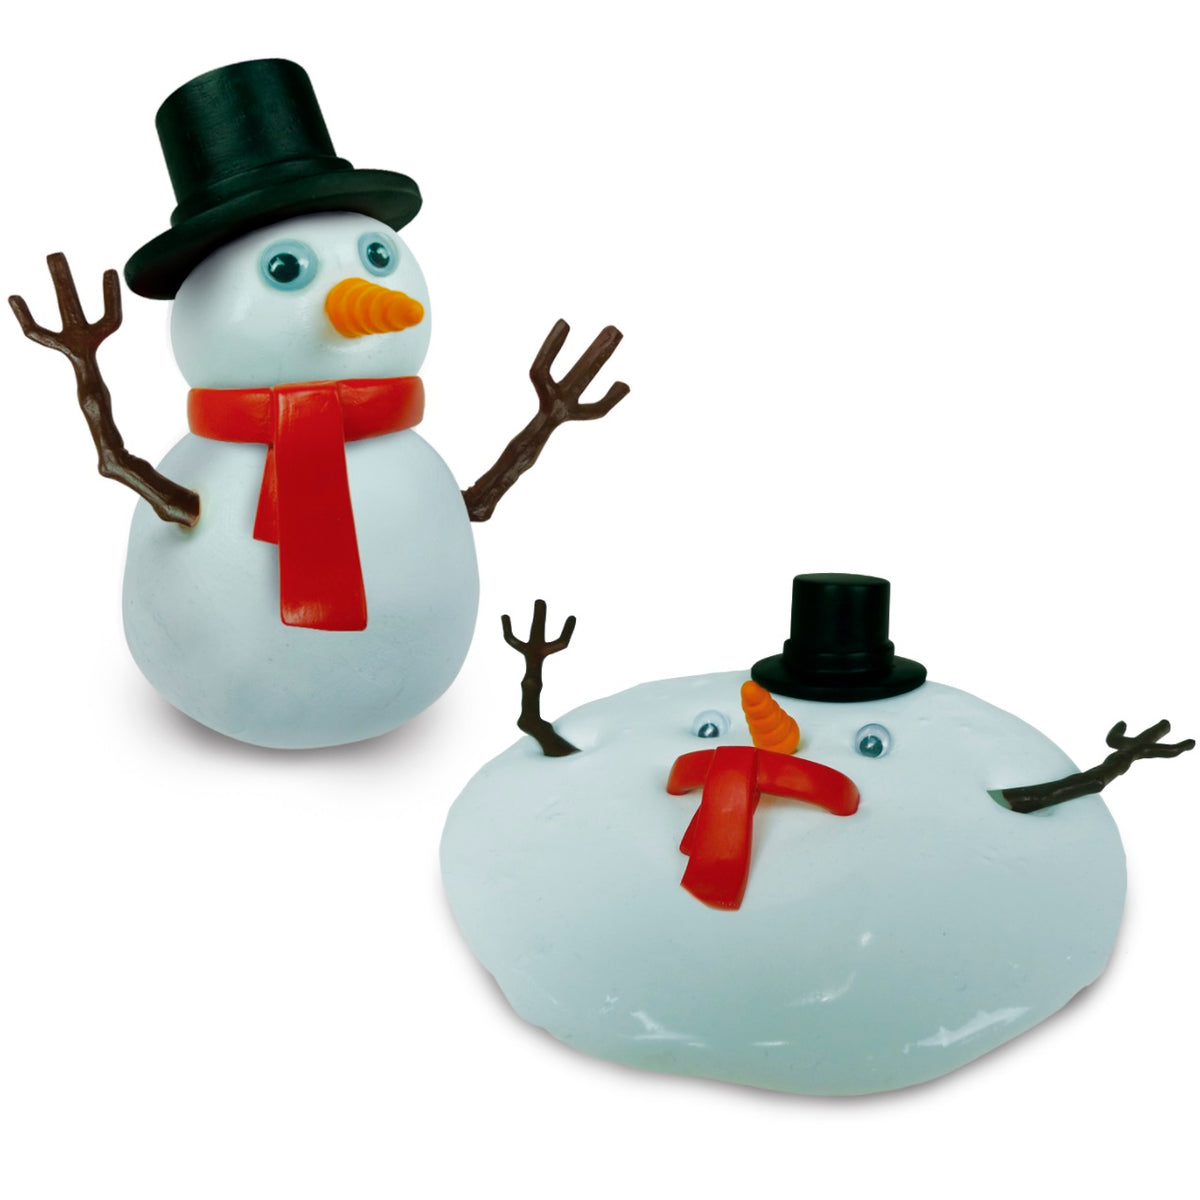 Ideas In Life Melting Snowman – Kids Arts Crafts Putty Kit